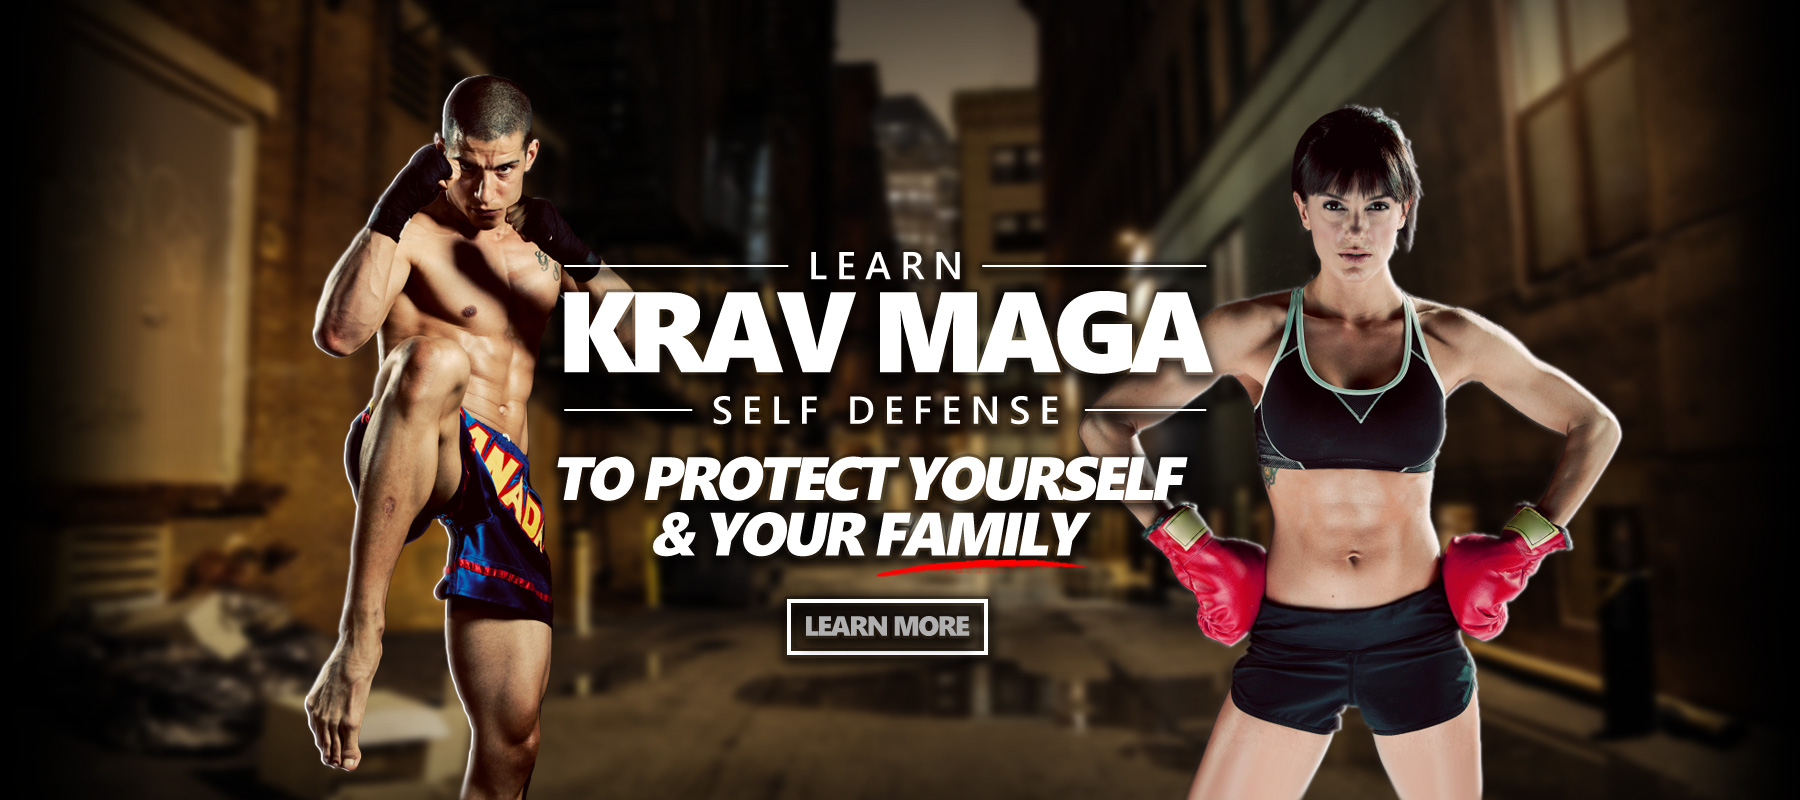 Learn Krav Maga Self Defense